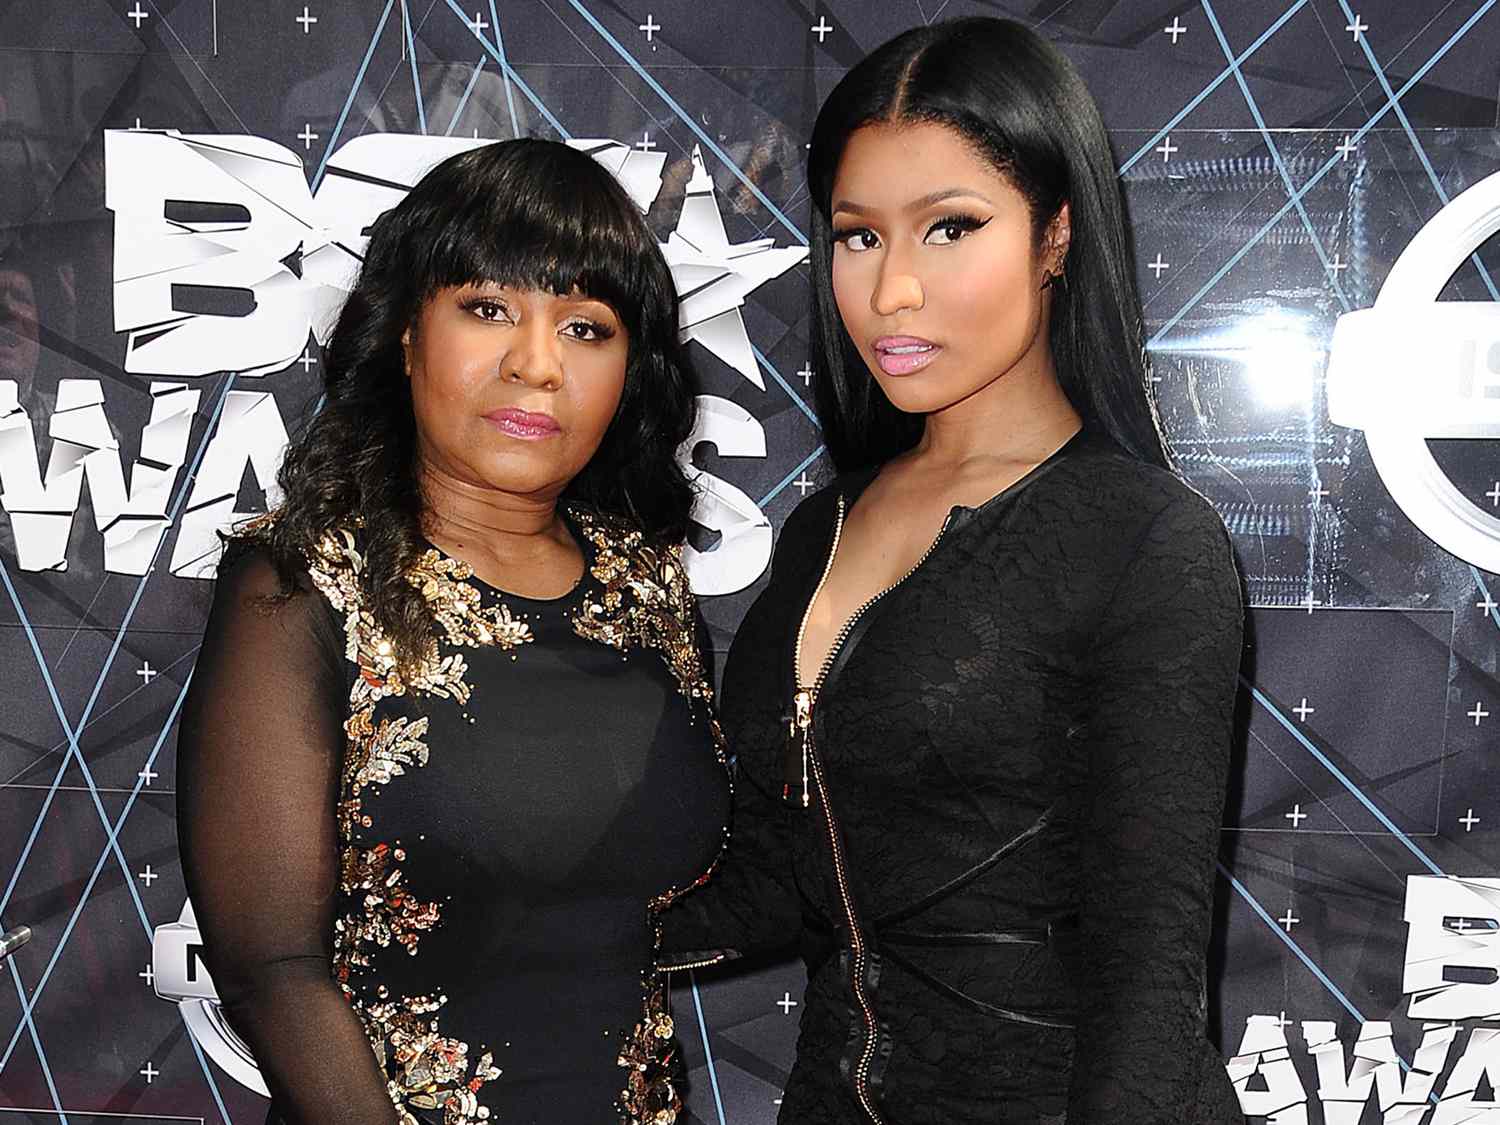 Nicki Minaj and mother Carol Maraj attend the 2015 BET Awards on June 28, 2015 in Los Angeles, California.